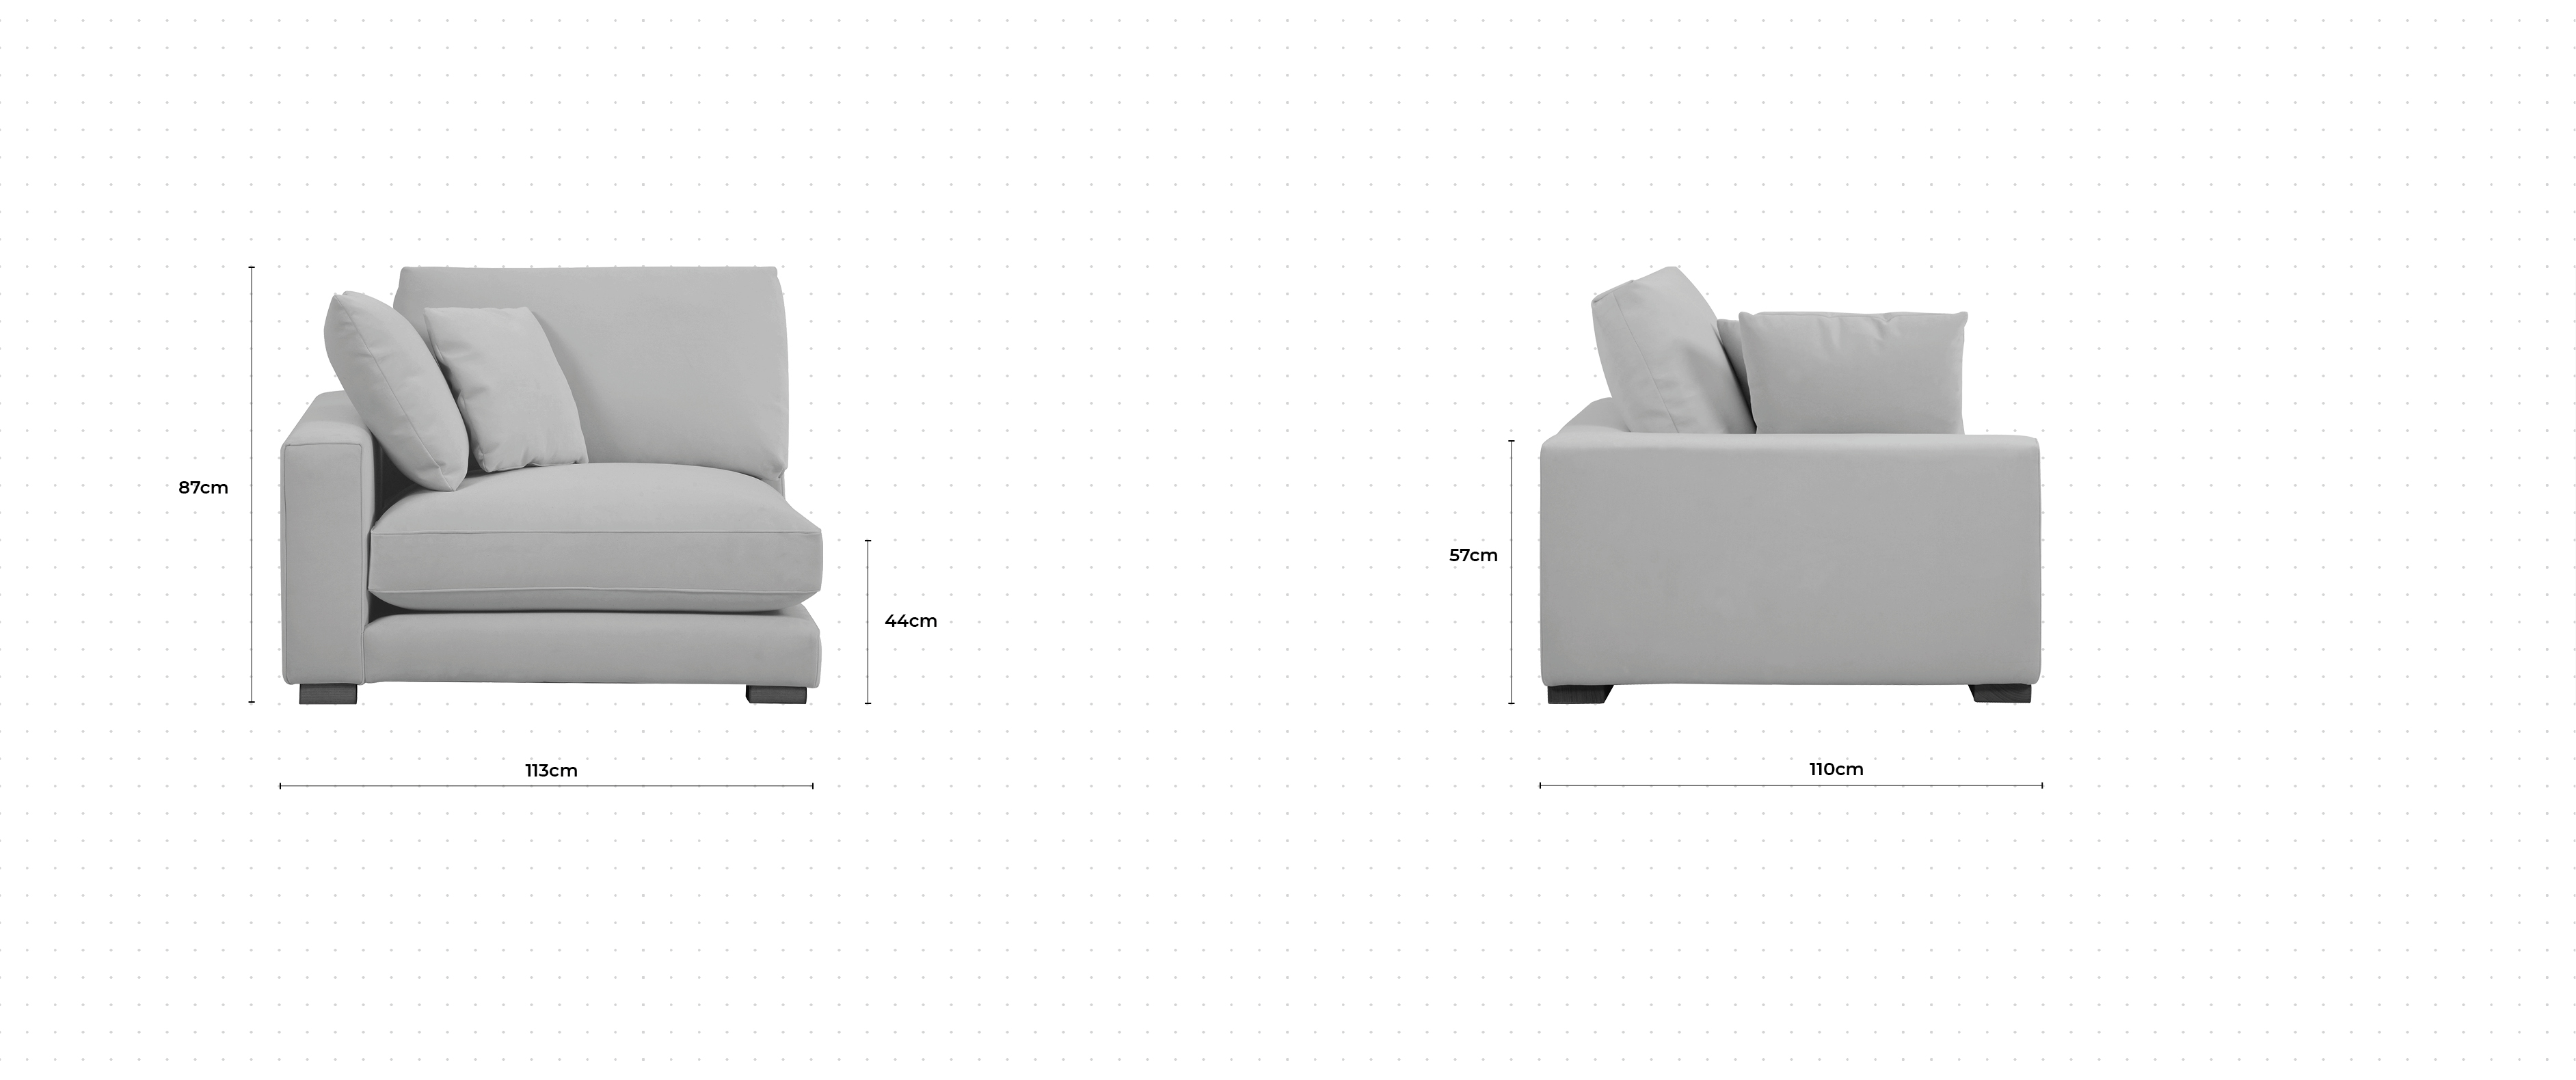 Dillon 1 Seater Sofa LHF dimensions